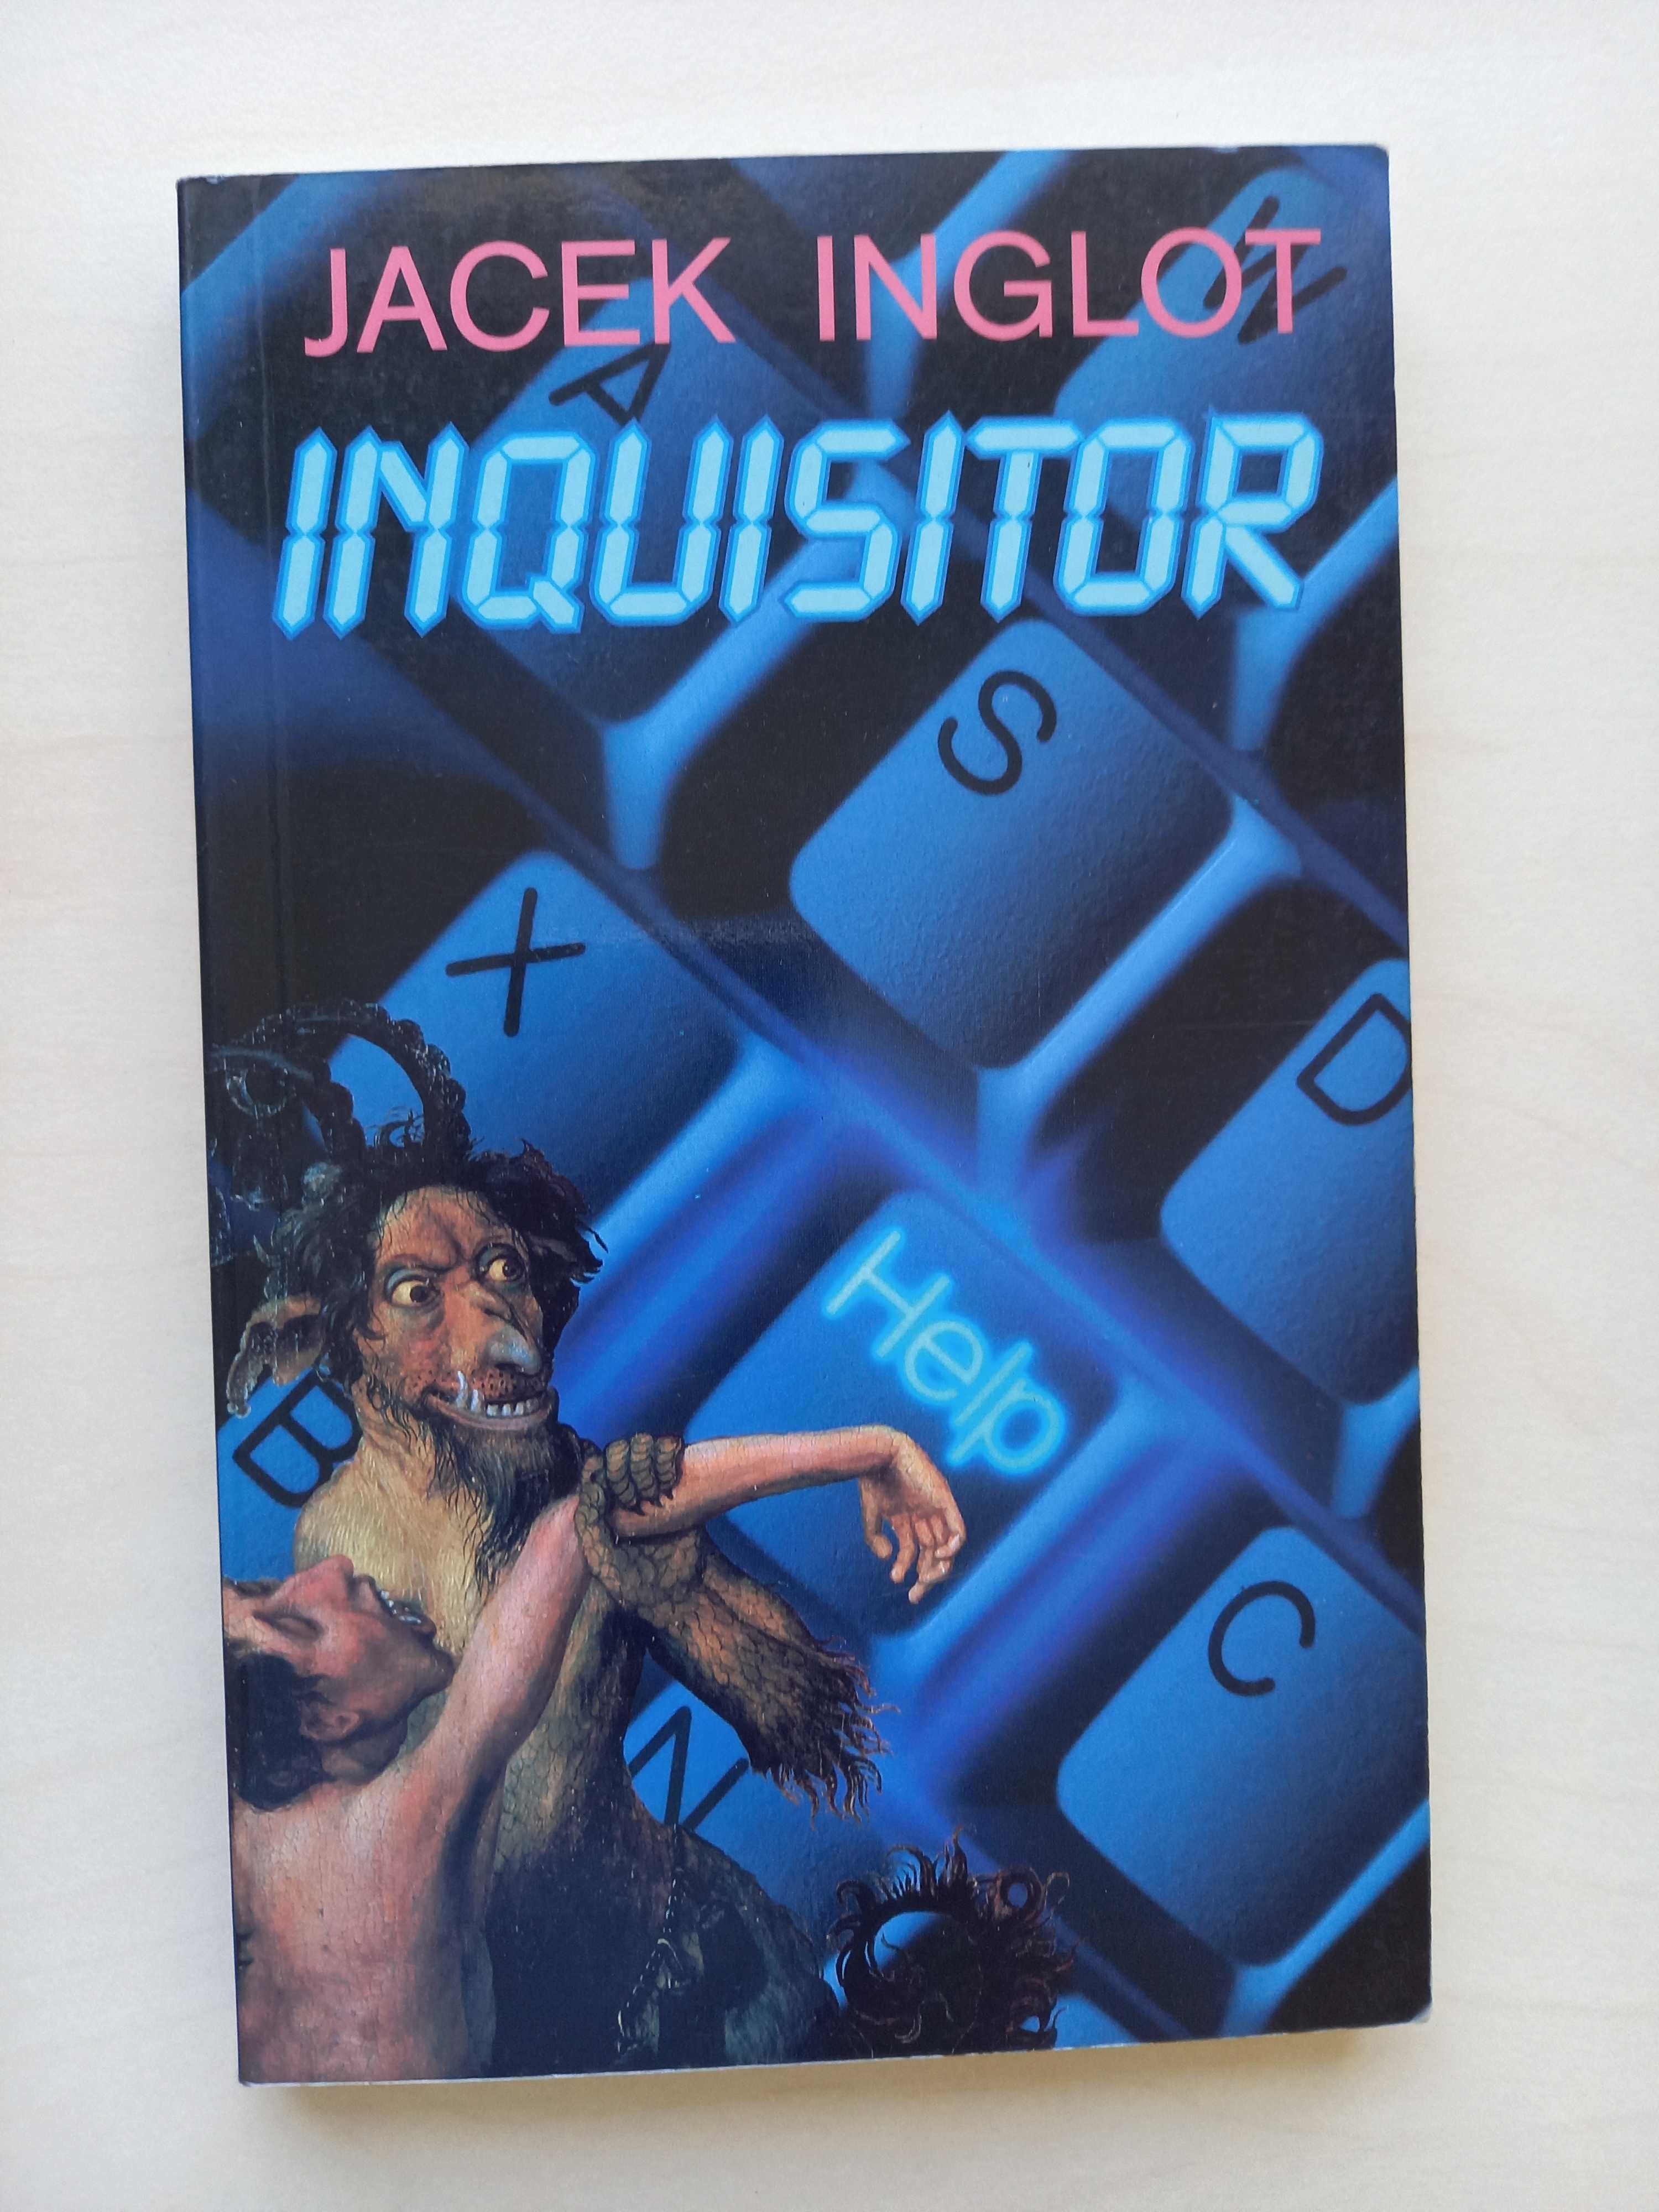 Jacek Inglot - Inquisitor